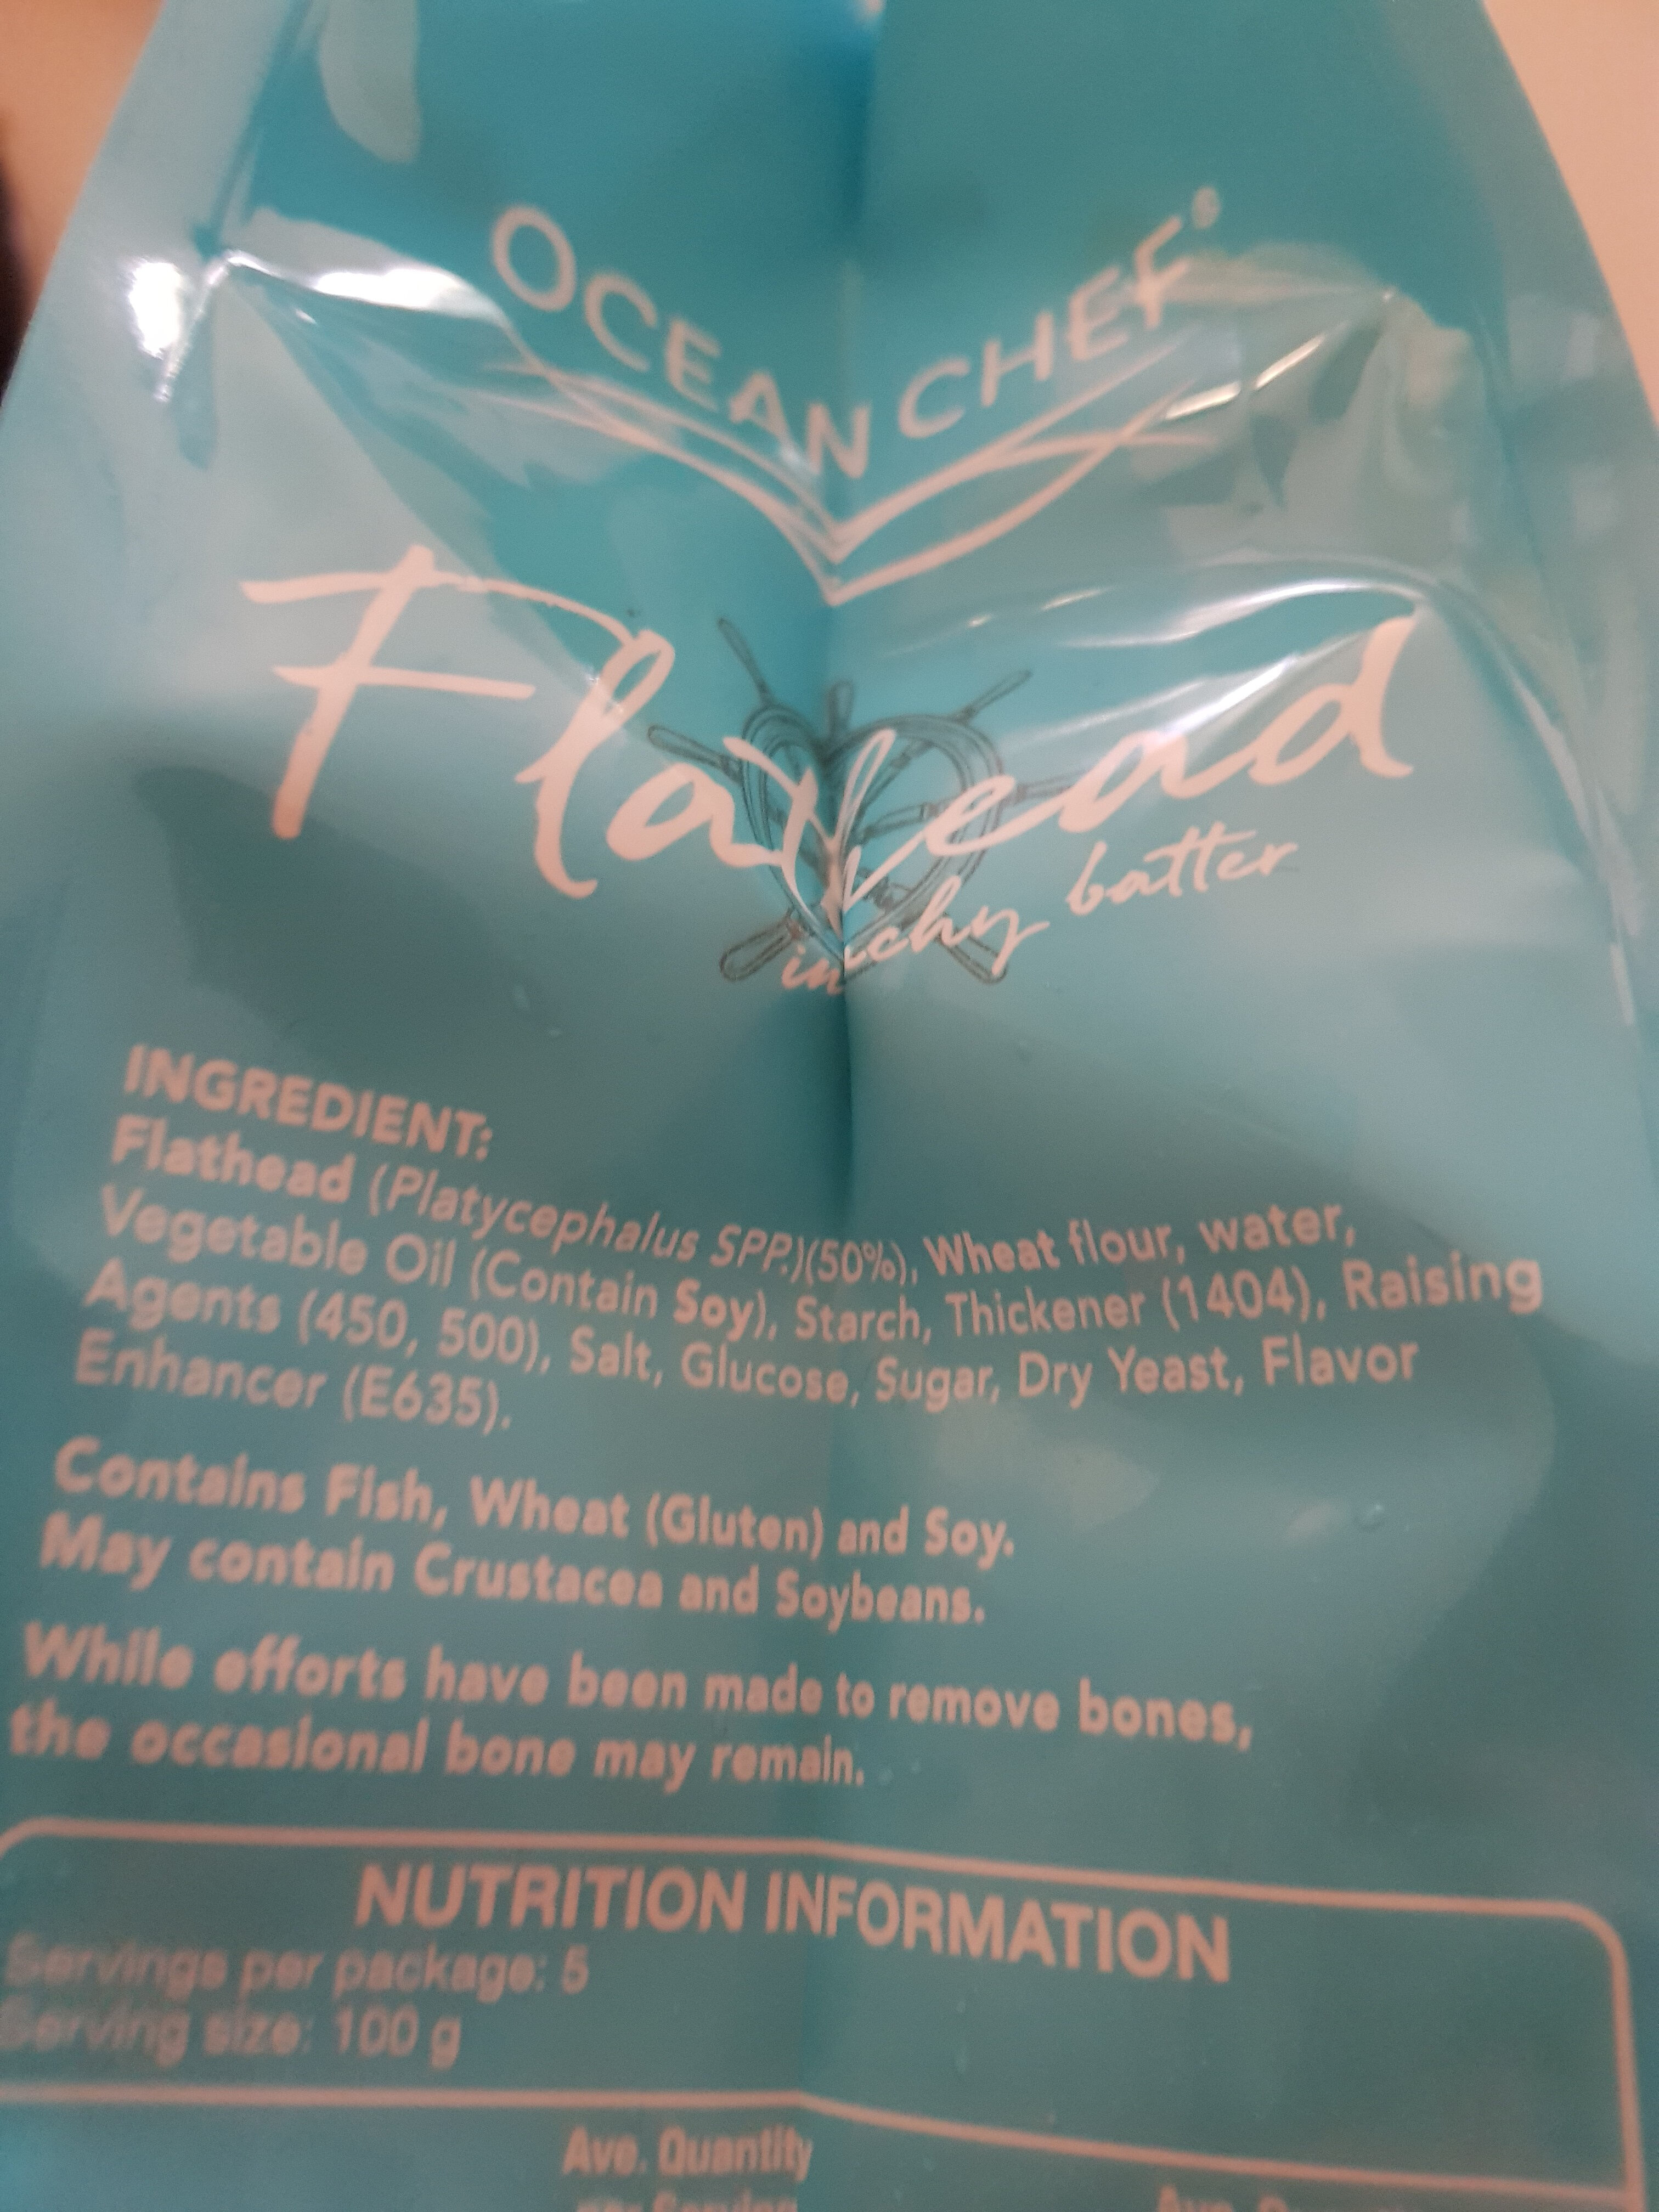 ocean chef flathead in crunchy batter - Ingredients